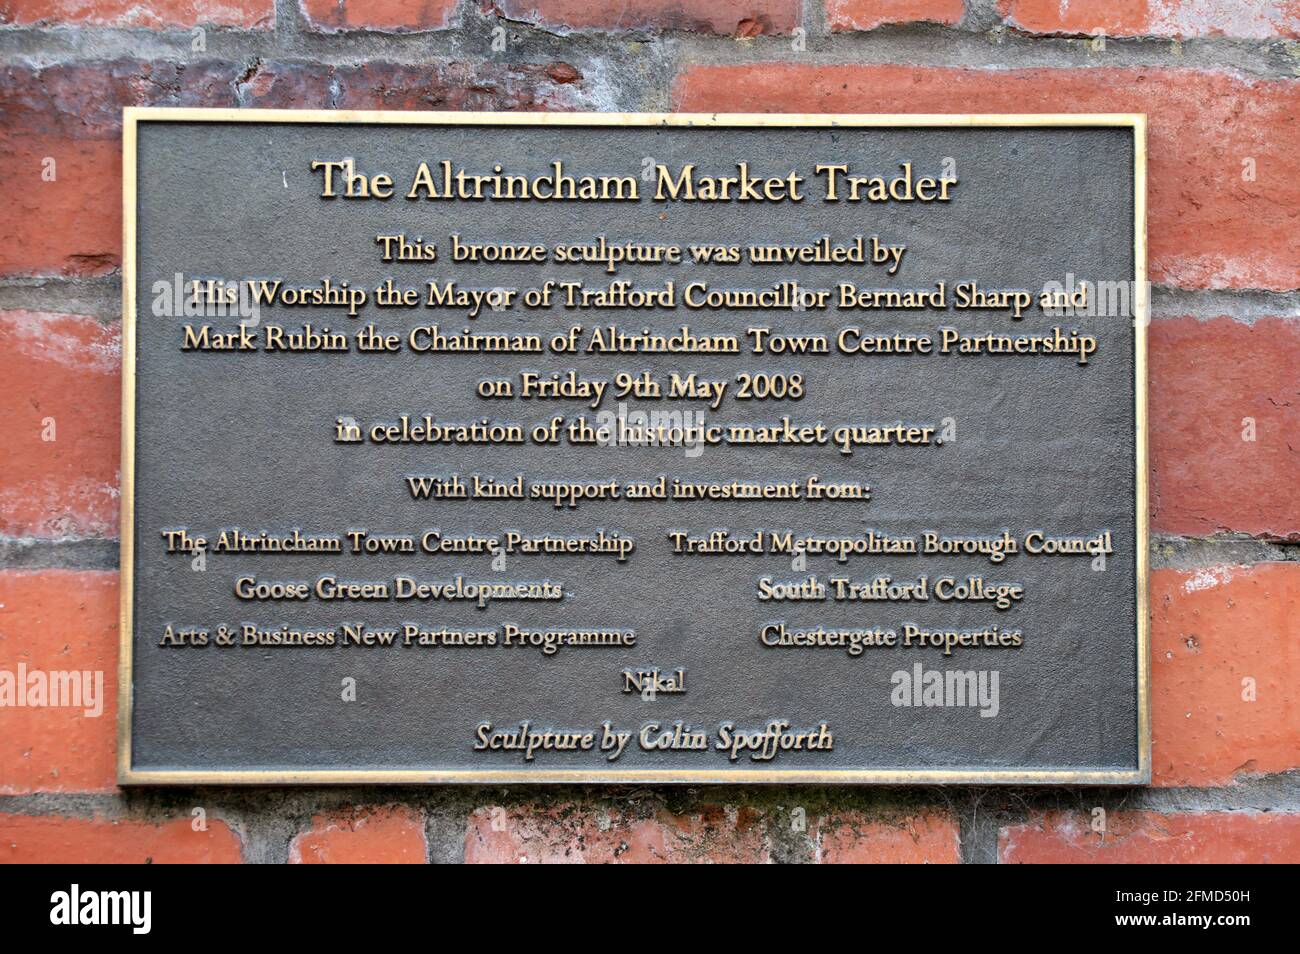 The Altrincham Market Trader information plaque Stock Photo